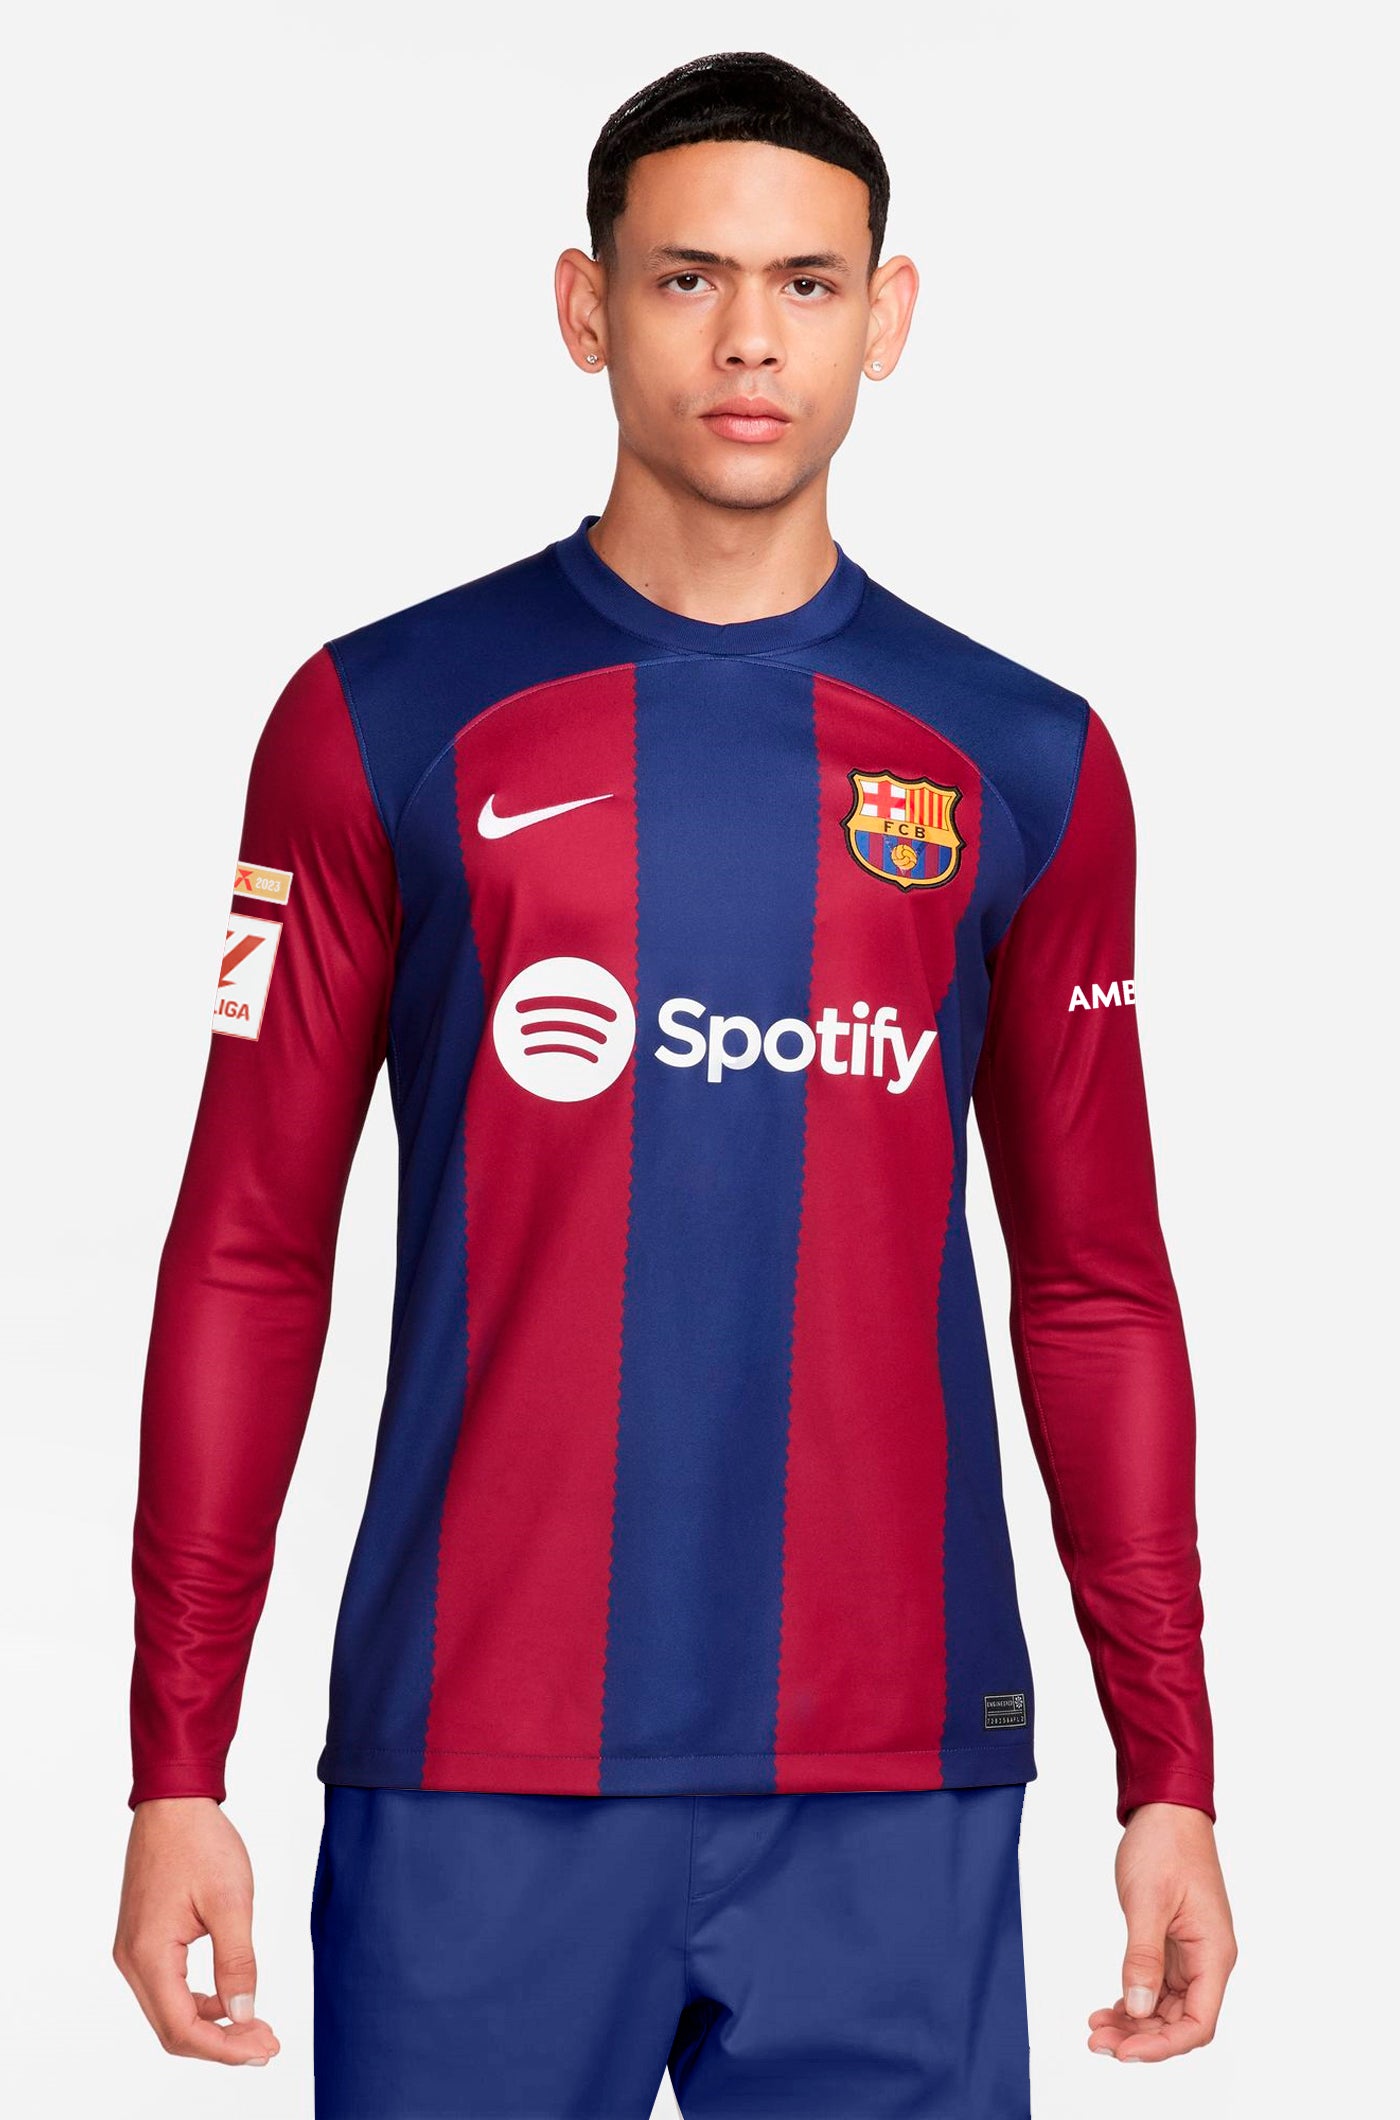 LFP FC Barcelona home shirt 23/24 - Long-sleeve - ROMEU